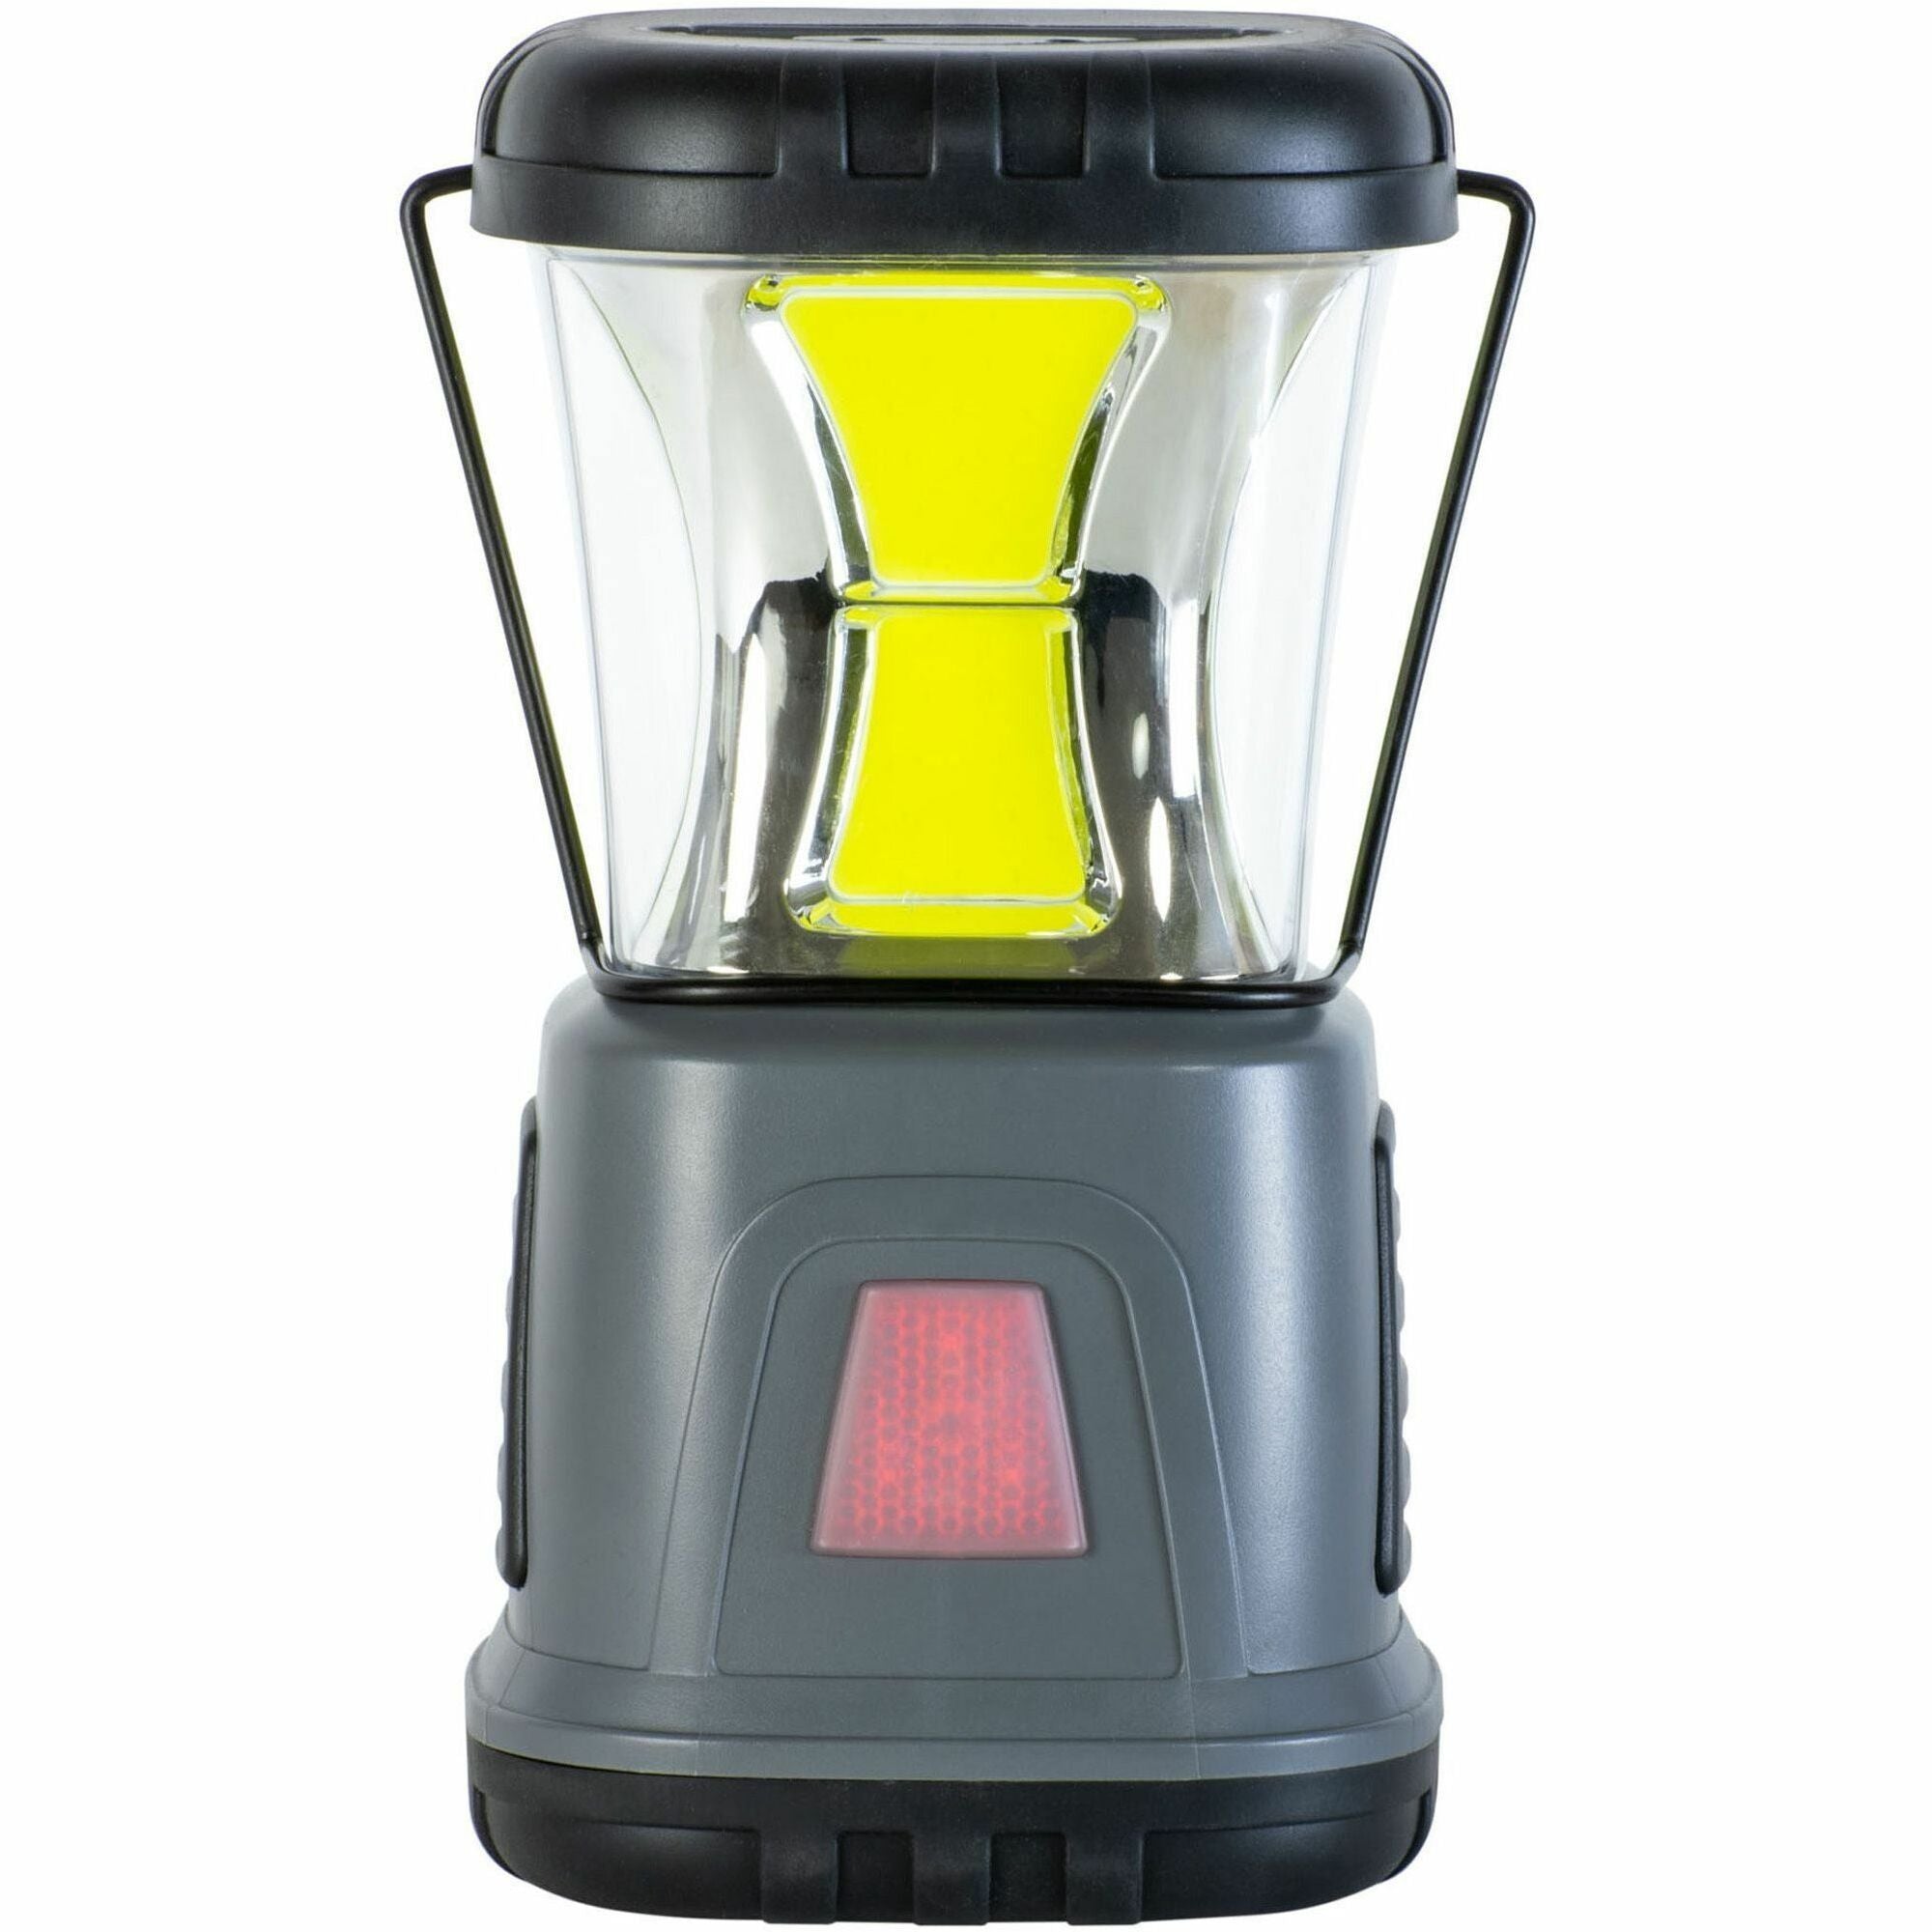 dorcy-2000-lumen-4d-multi-function-lantern-2000-lm-lumen-4-x-d-battery-impact-resistant-weather-resistant-water-resistant-gray-silver_dcy413119 - 1